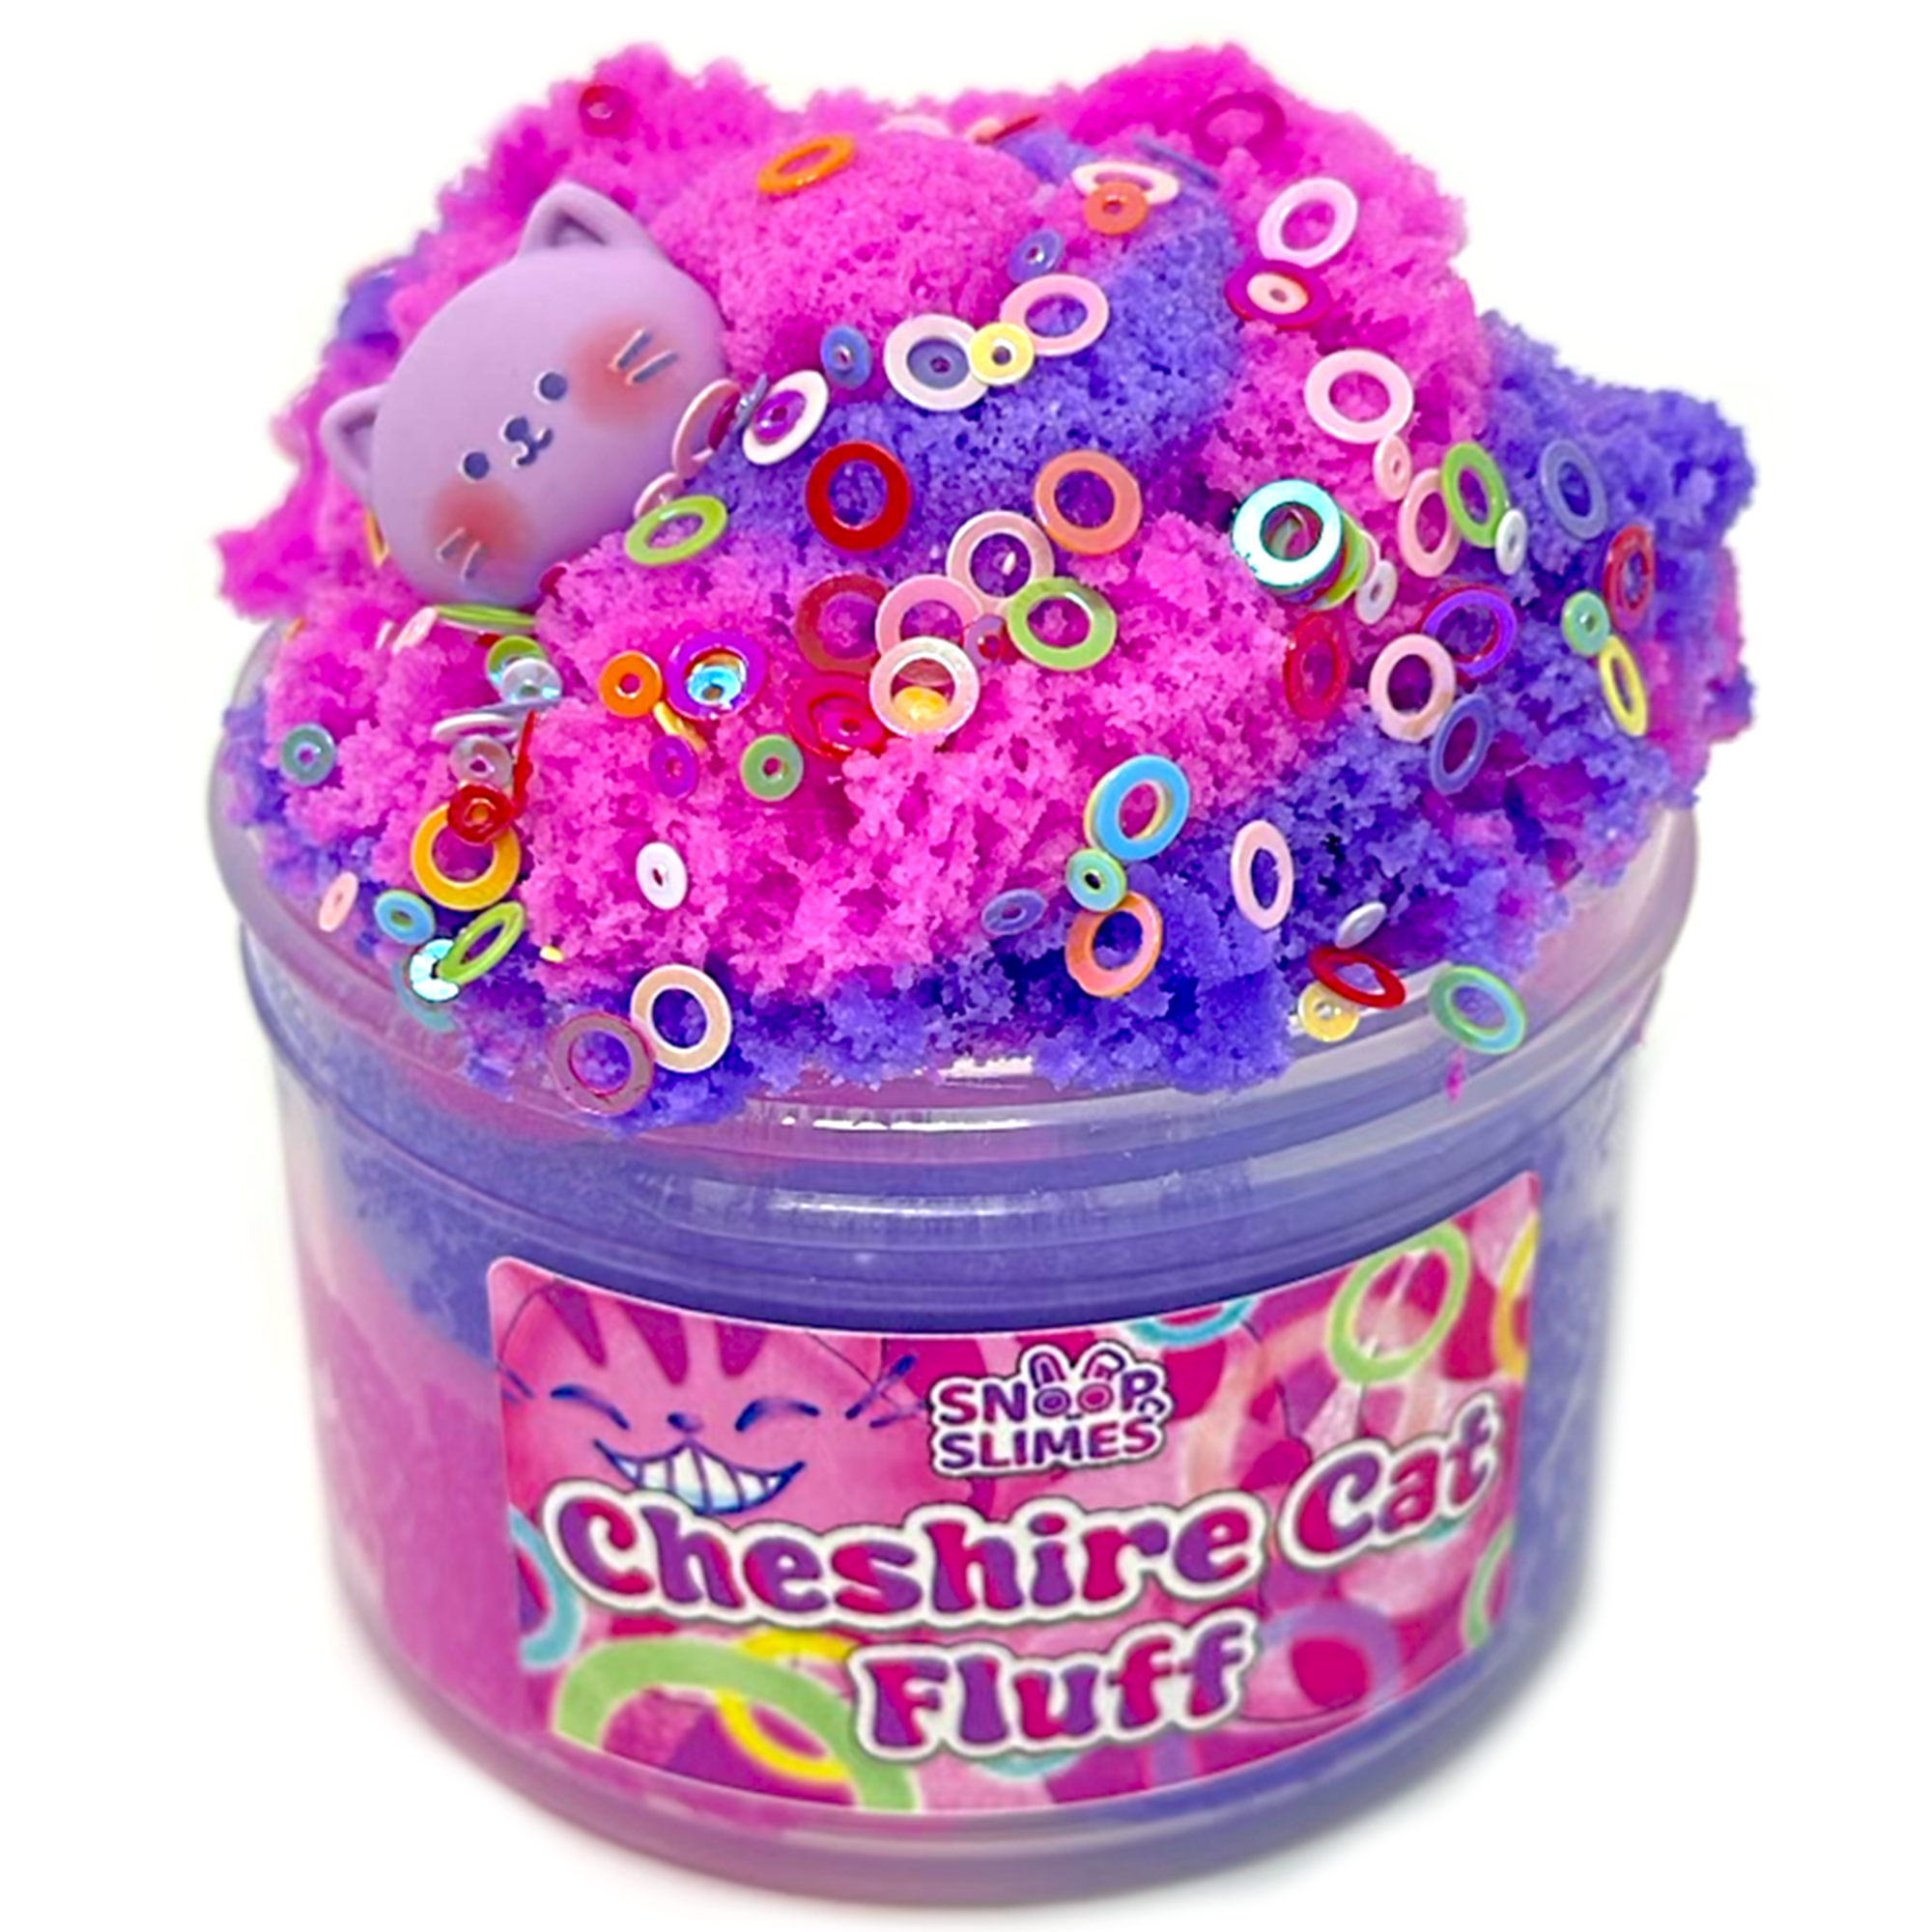 Cheshire Cat Fluff Slime